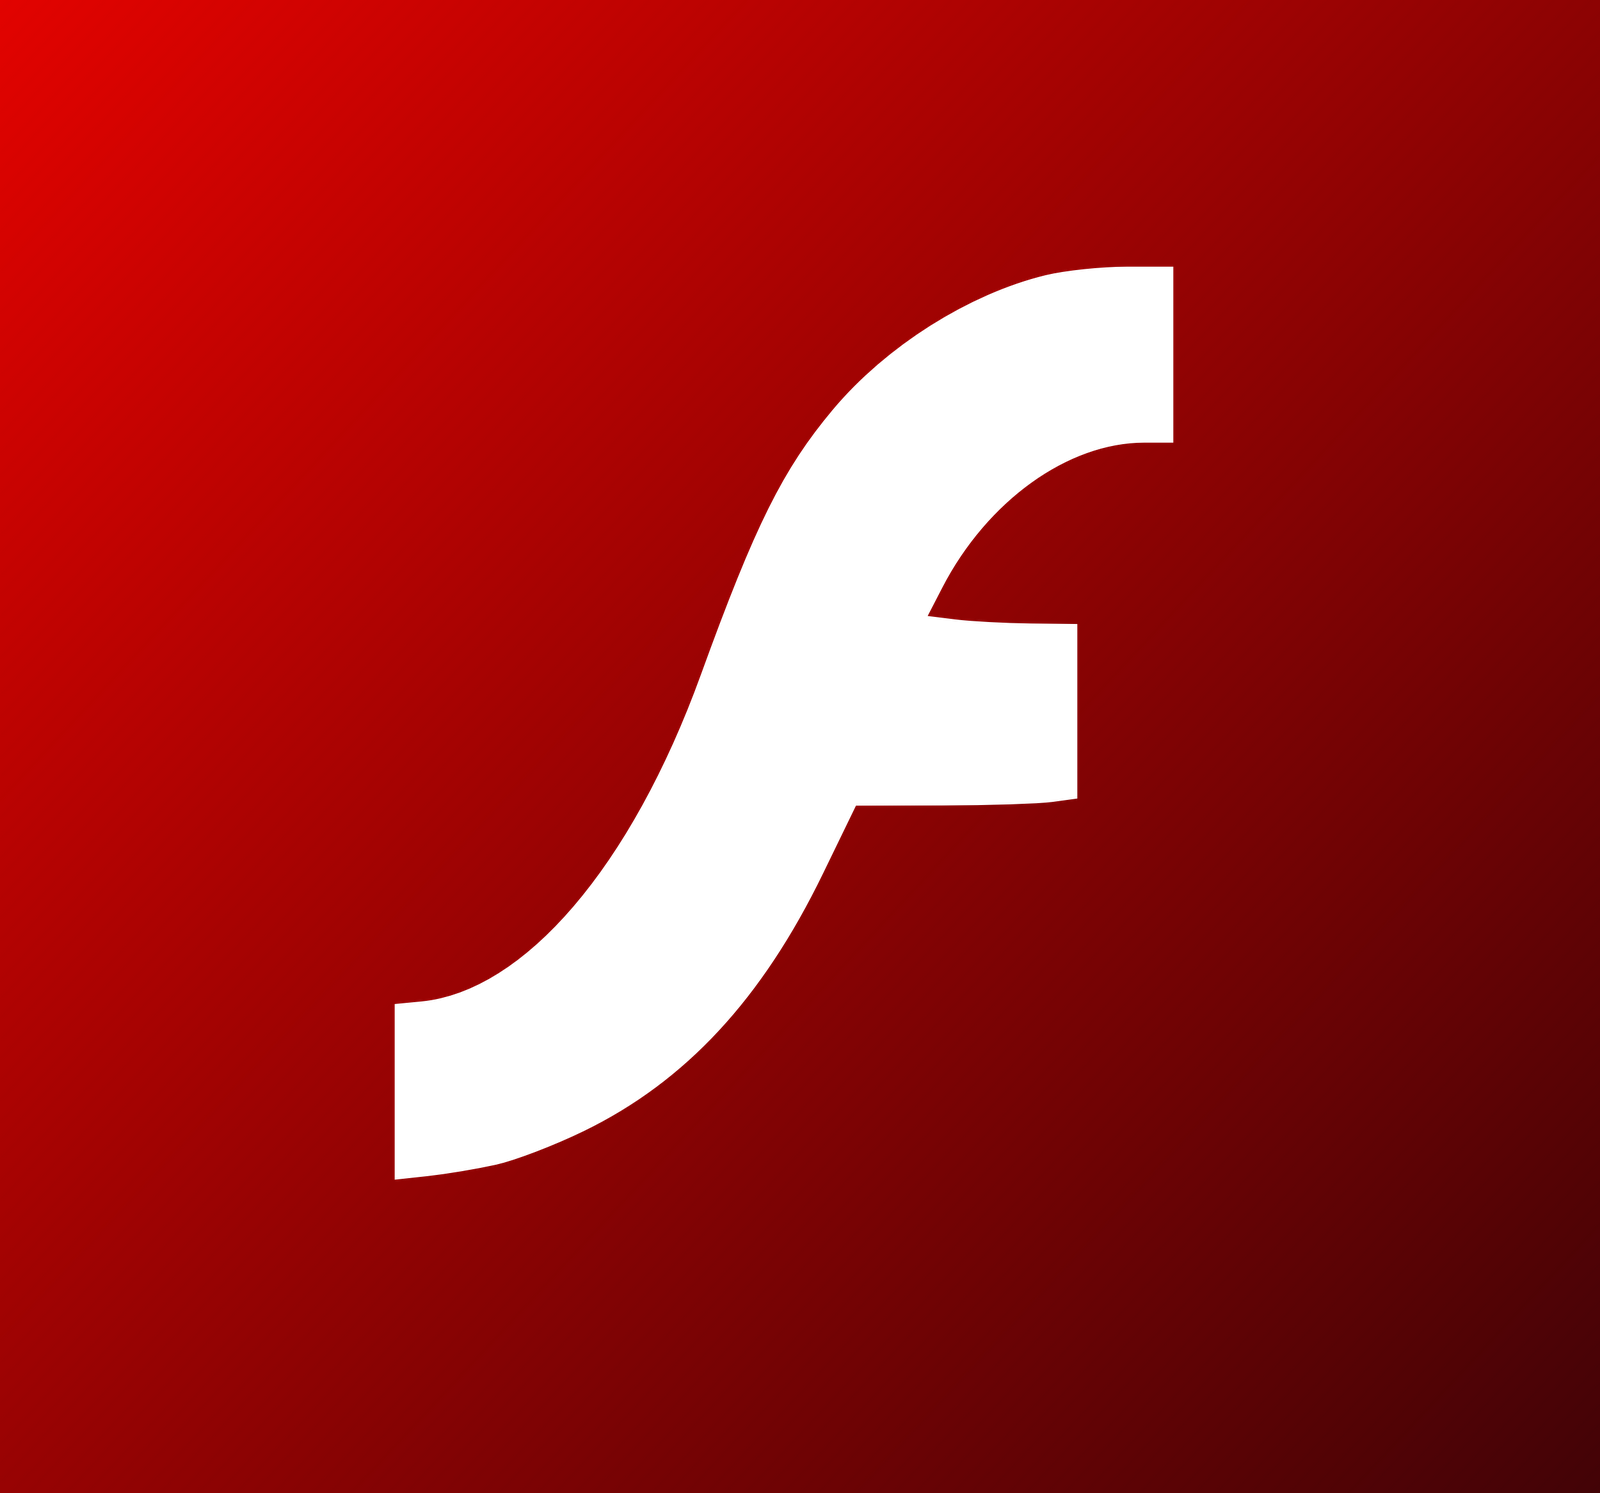 Adobe Flash Player Tablet Download